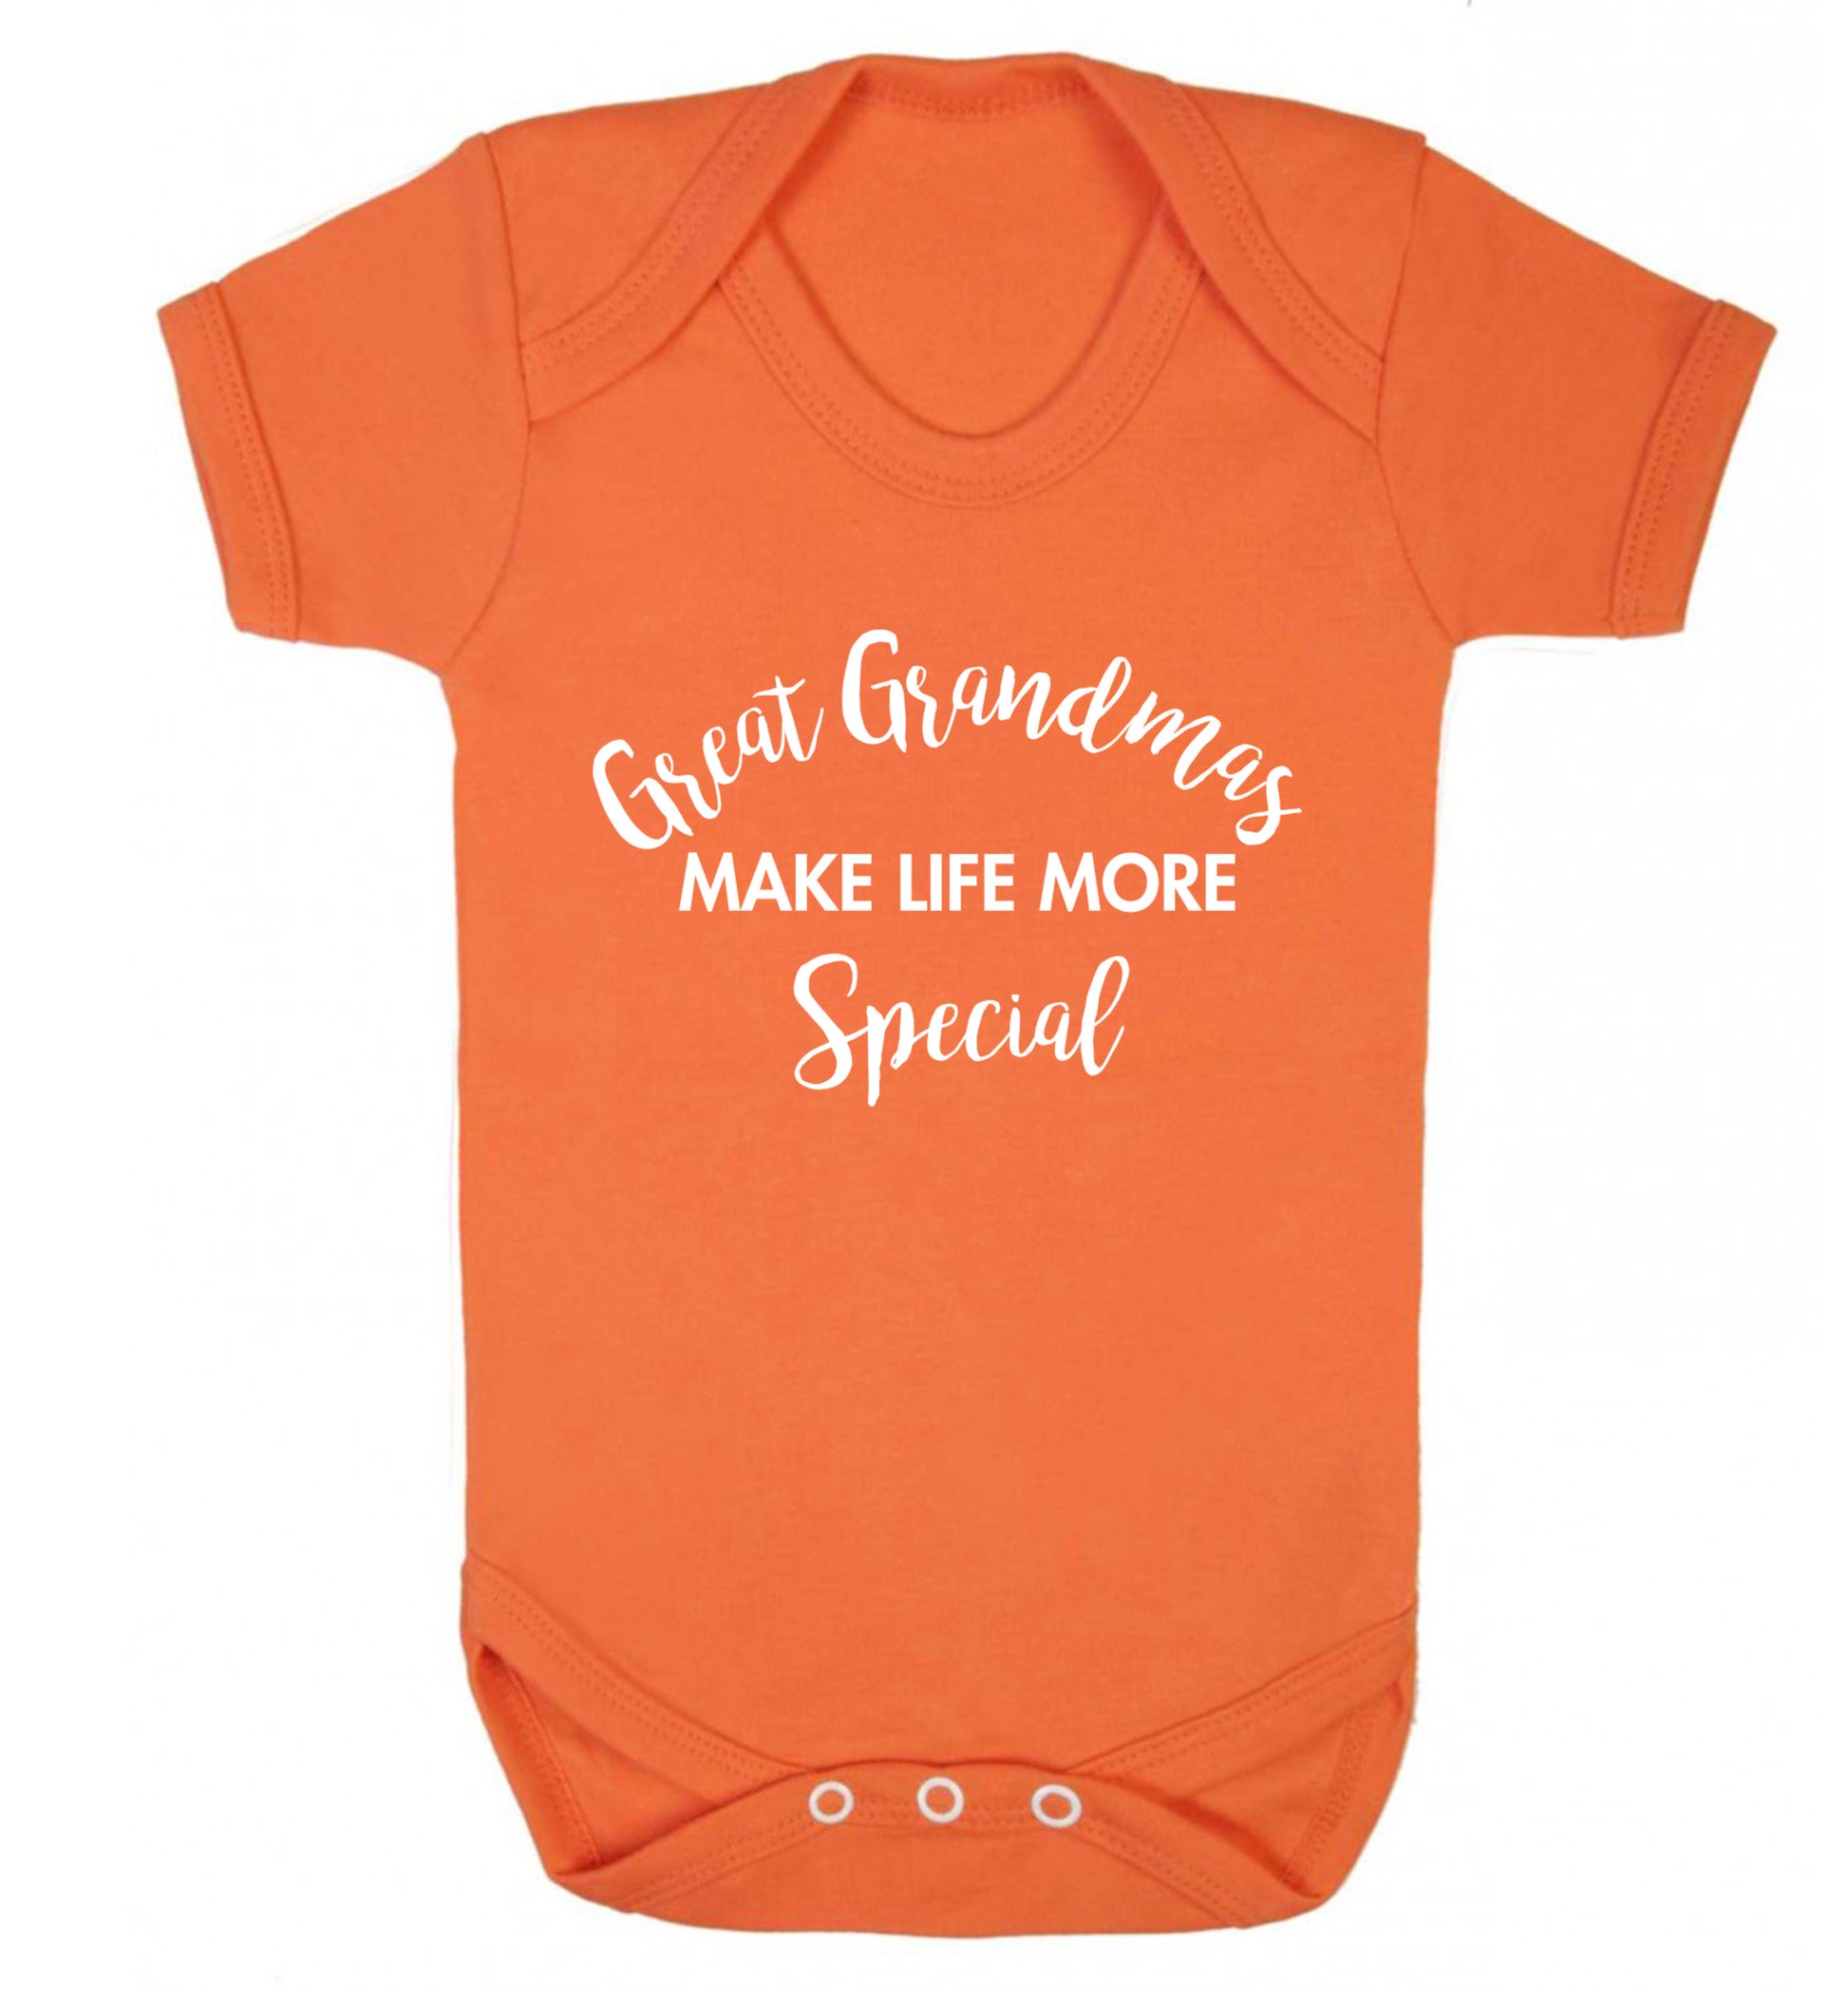 Great Grandmas make life more special Baby Vest orange 18-24 months